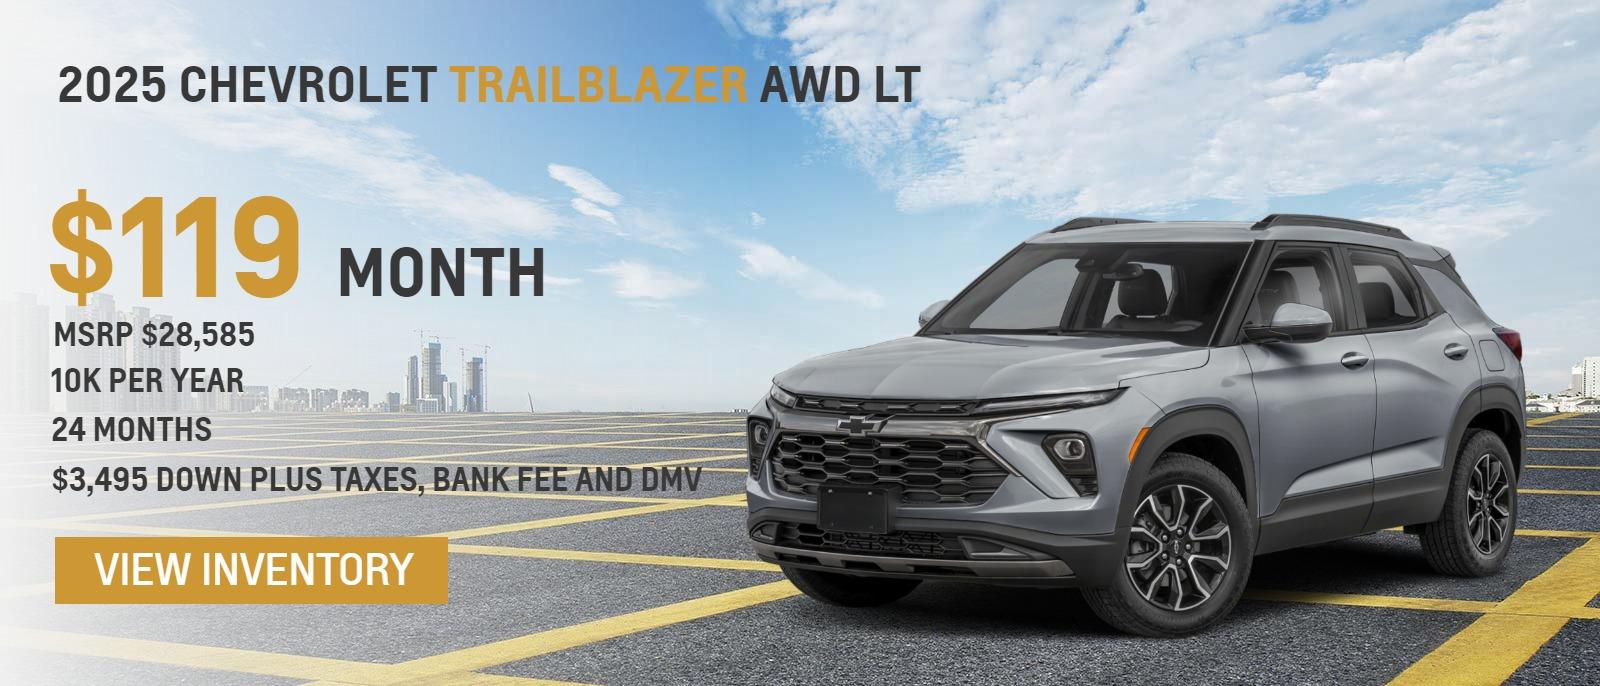 2024 Chevrolet Trailblazer AWD LT
MSRP $28,585.
10k per year
24 months
$119. month
$3,495 down plus taxes, bank fee and DMV